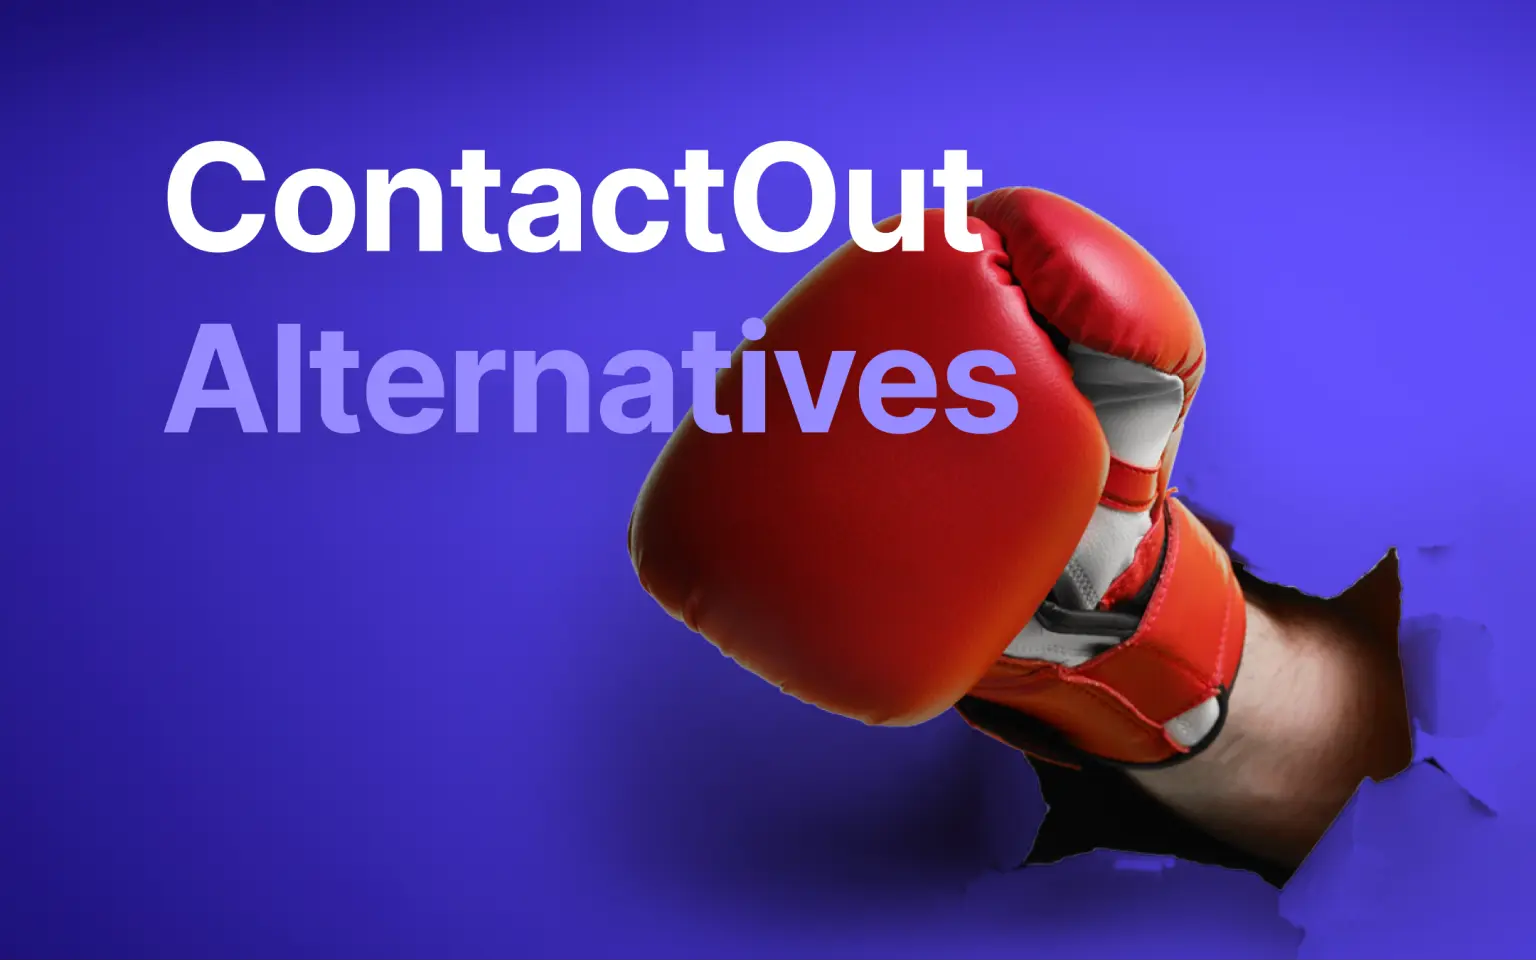 ContactOut vs. Lusha a boxing glove